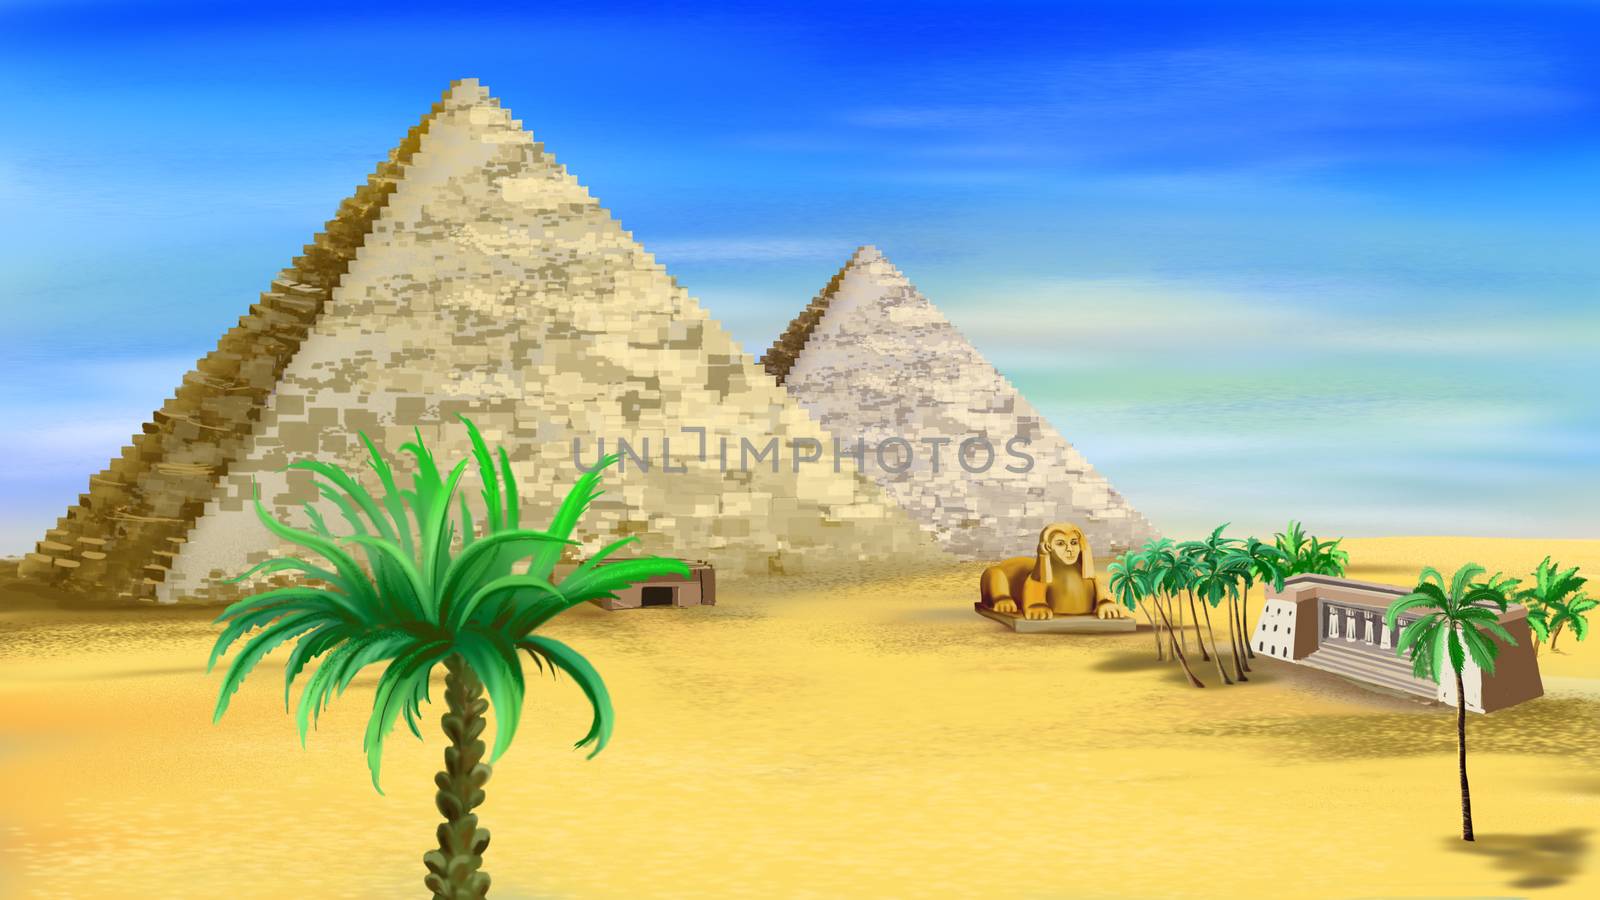 Egyptian pyramids by Multipedia